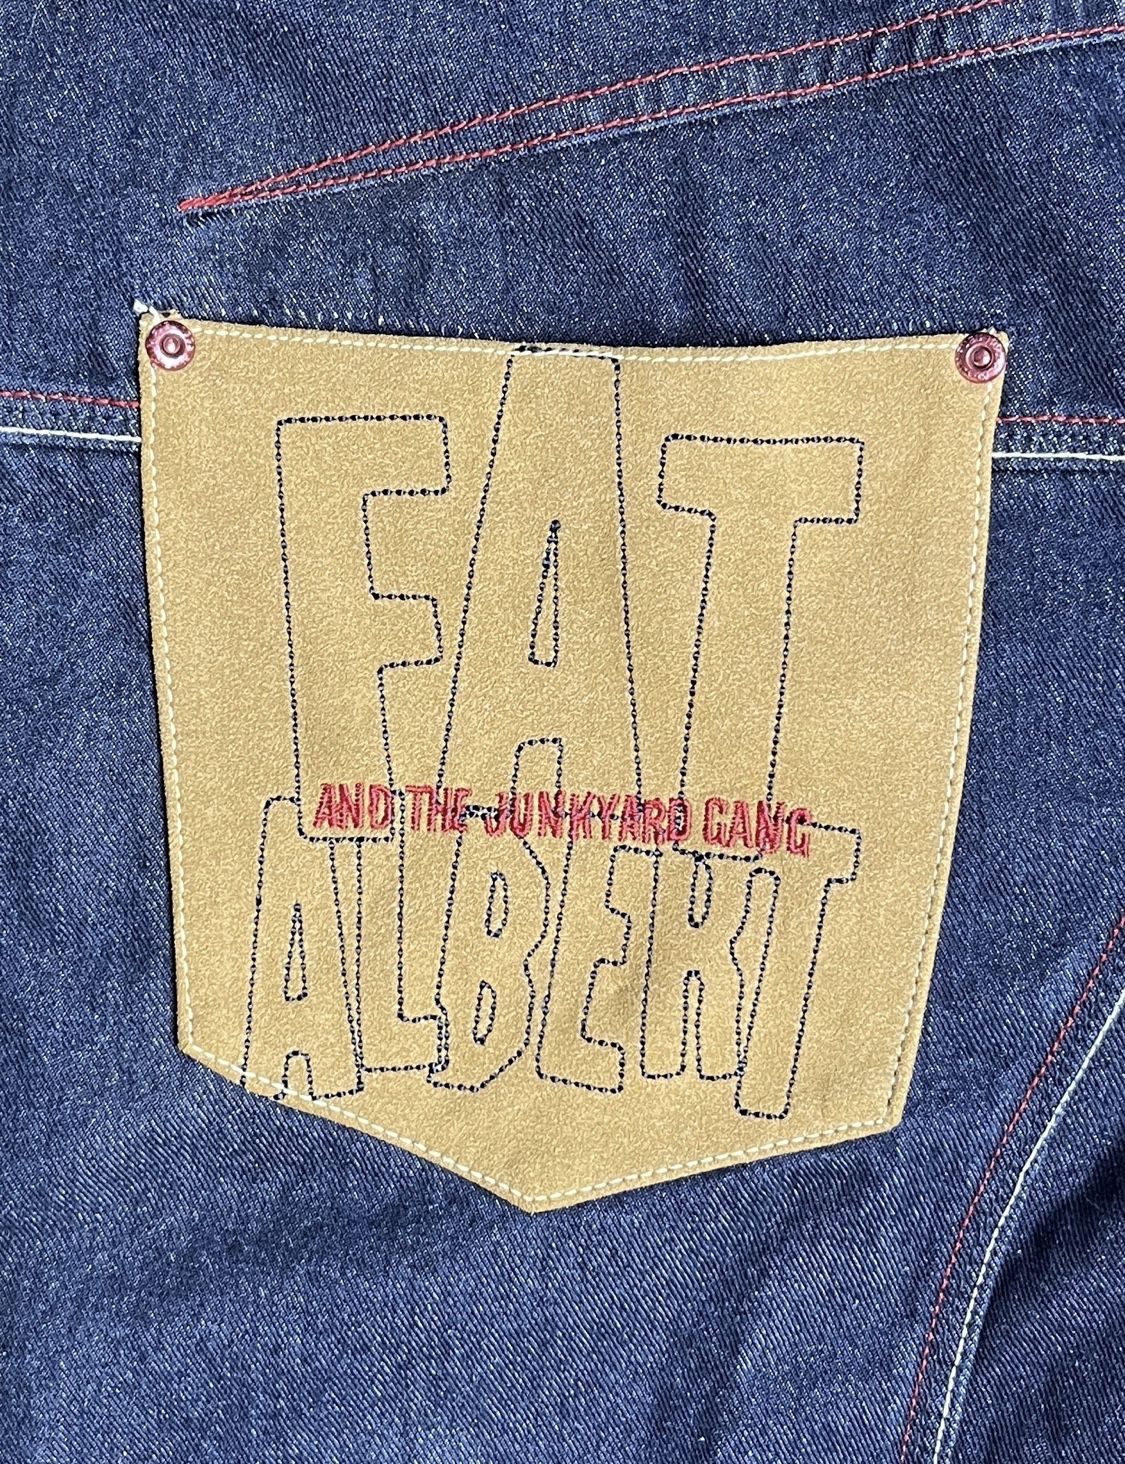 Platinum FUBU Fat Albert and The Junkyard Gang Denim Jacket   Size XL